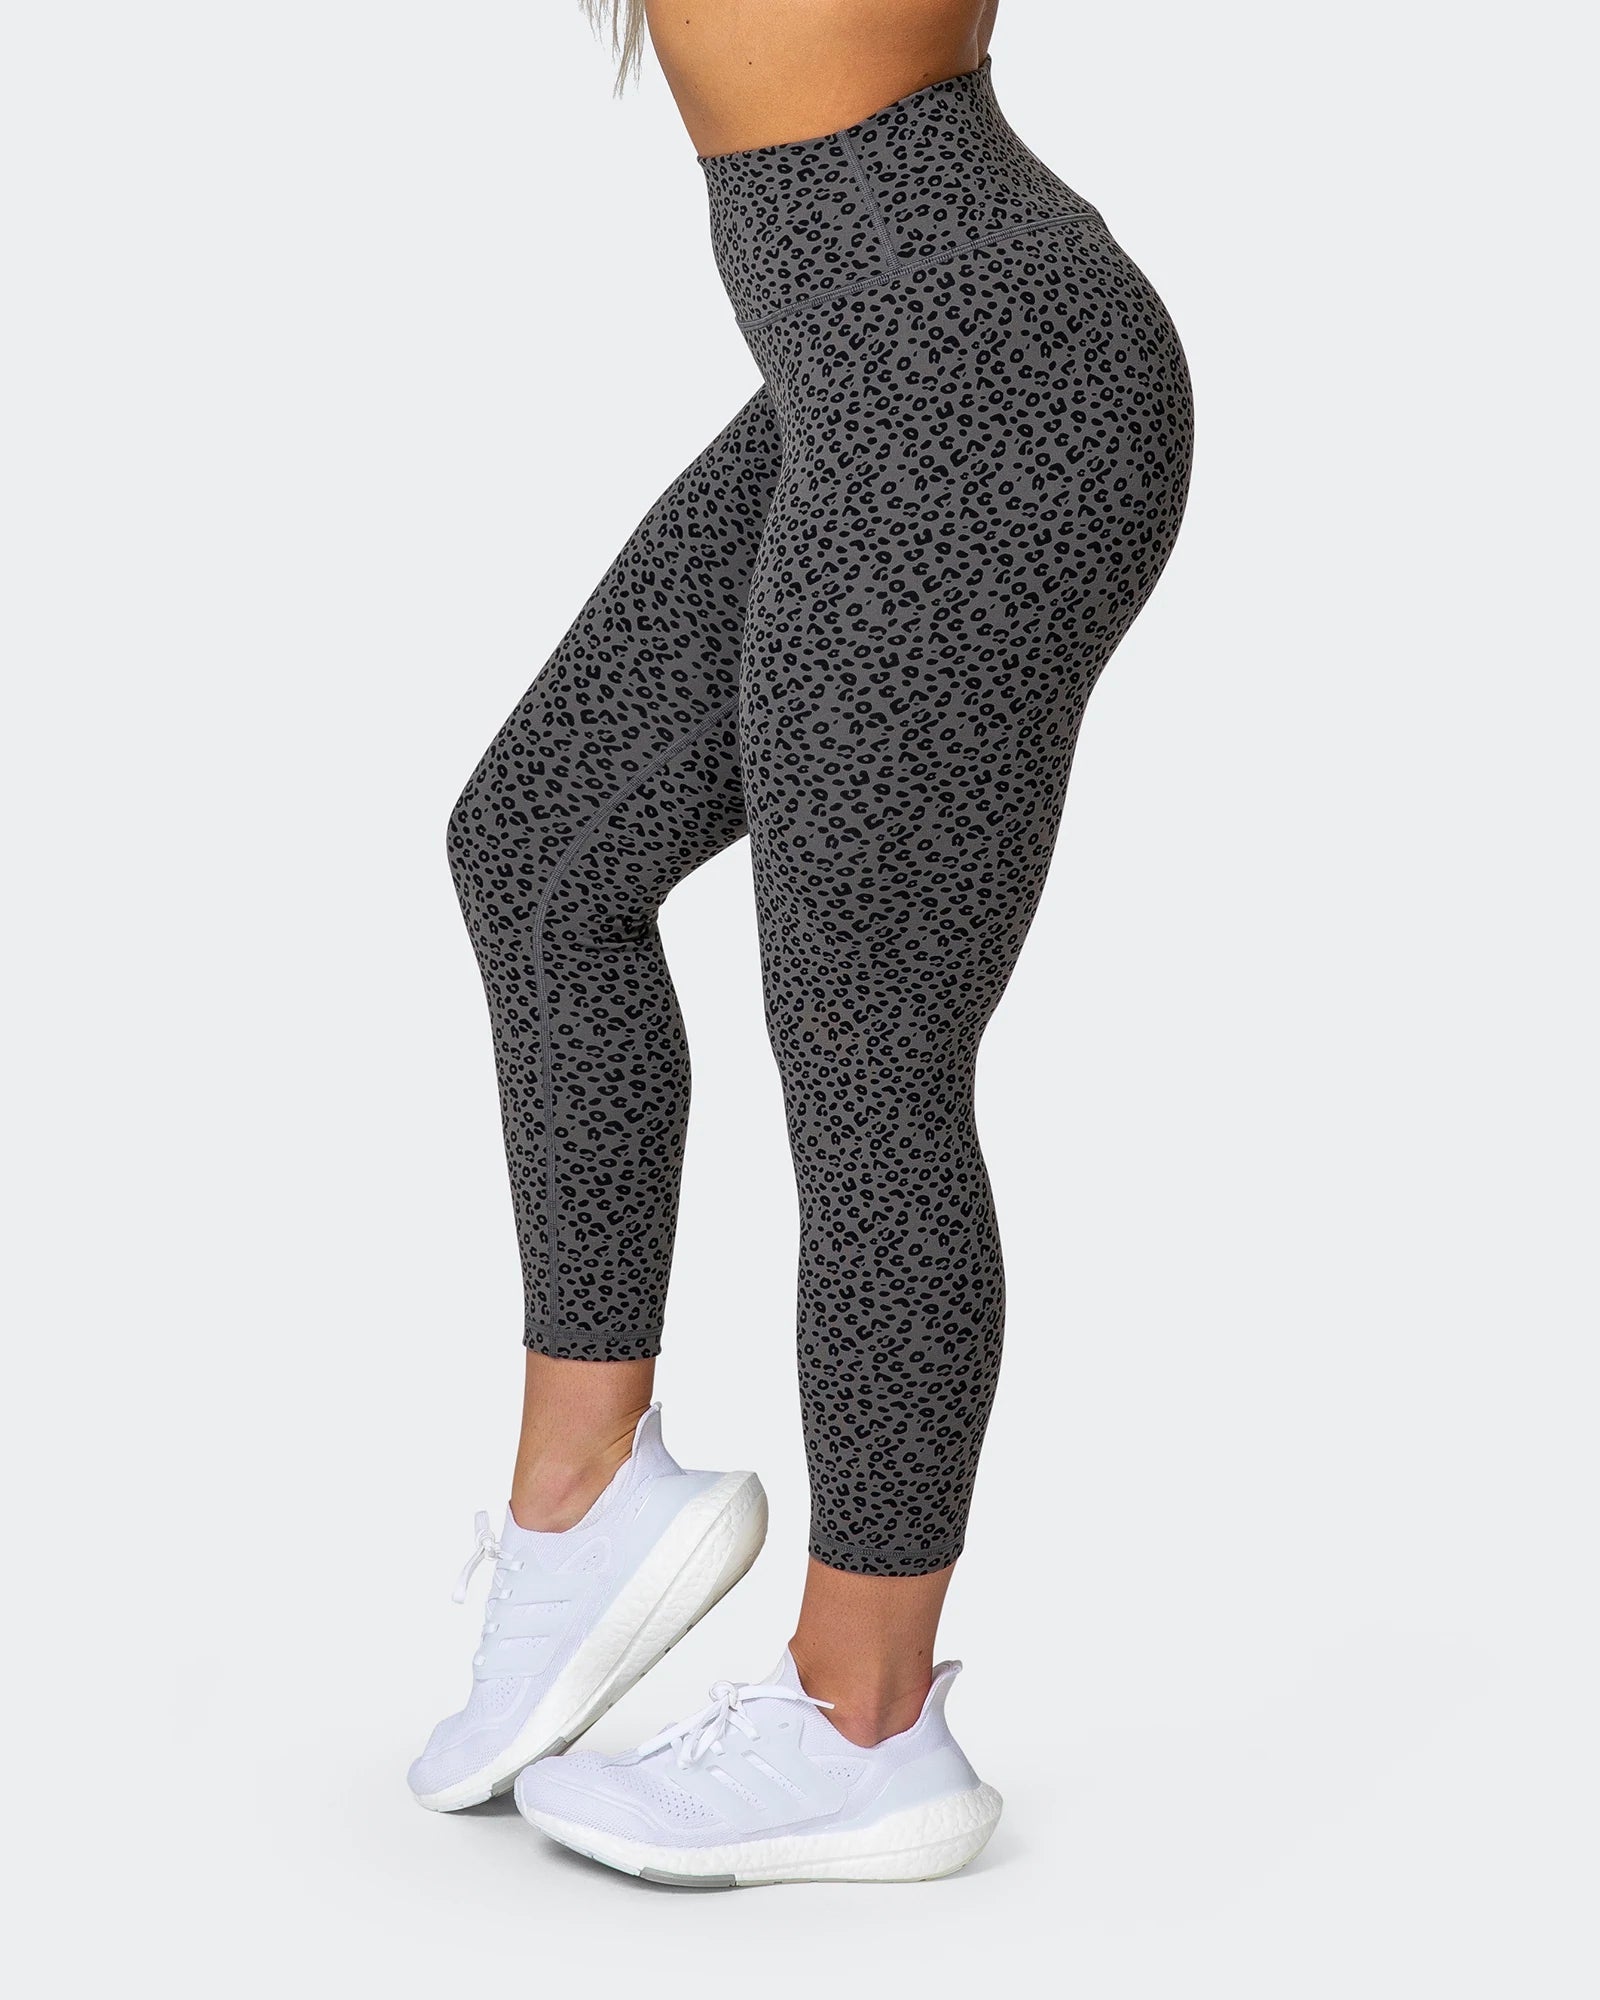 Buyr.com | Active Leggings | Nike Women's One Luxe Tight Fit Mid Rise Cheetah  Print Leggings (White/Black, Small)